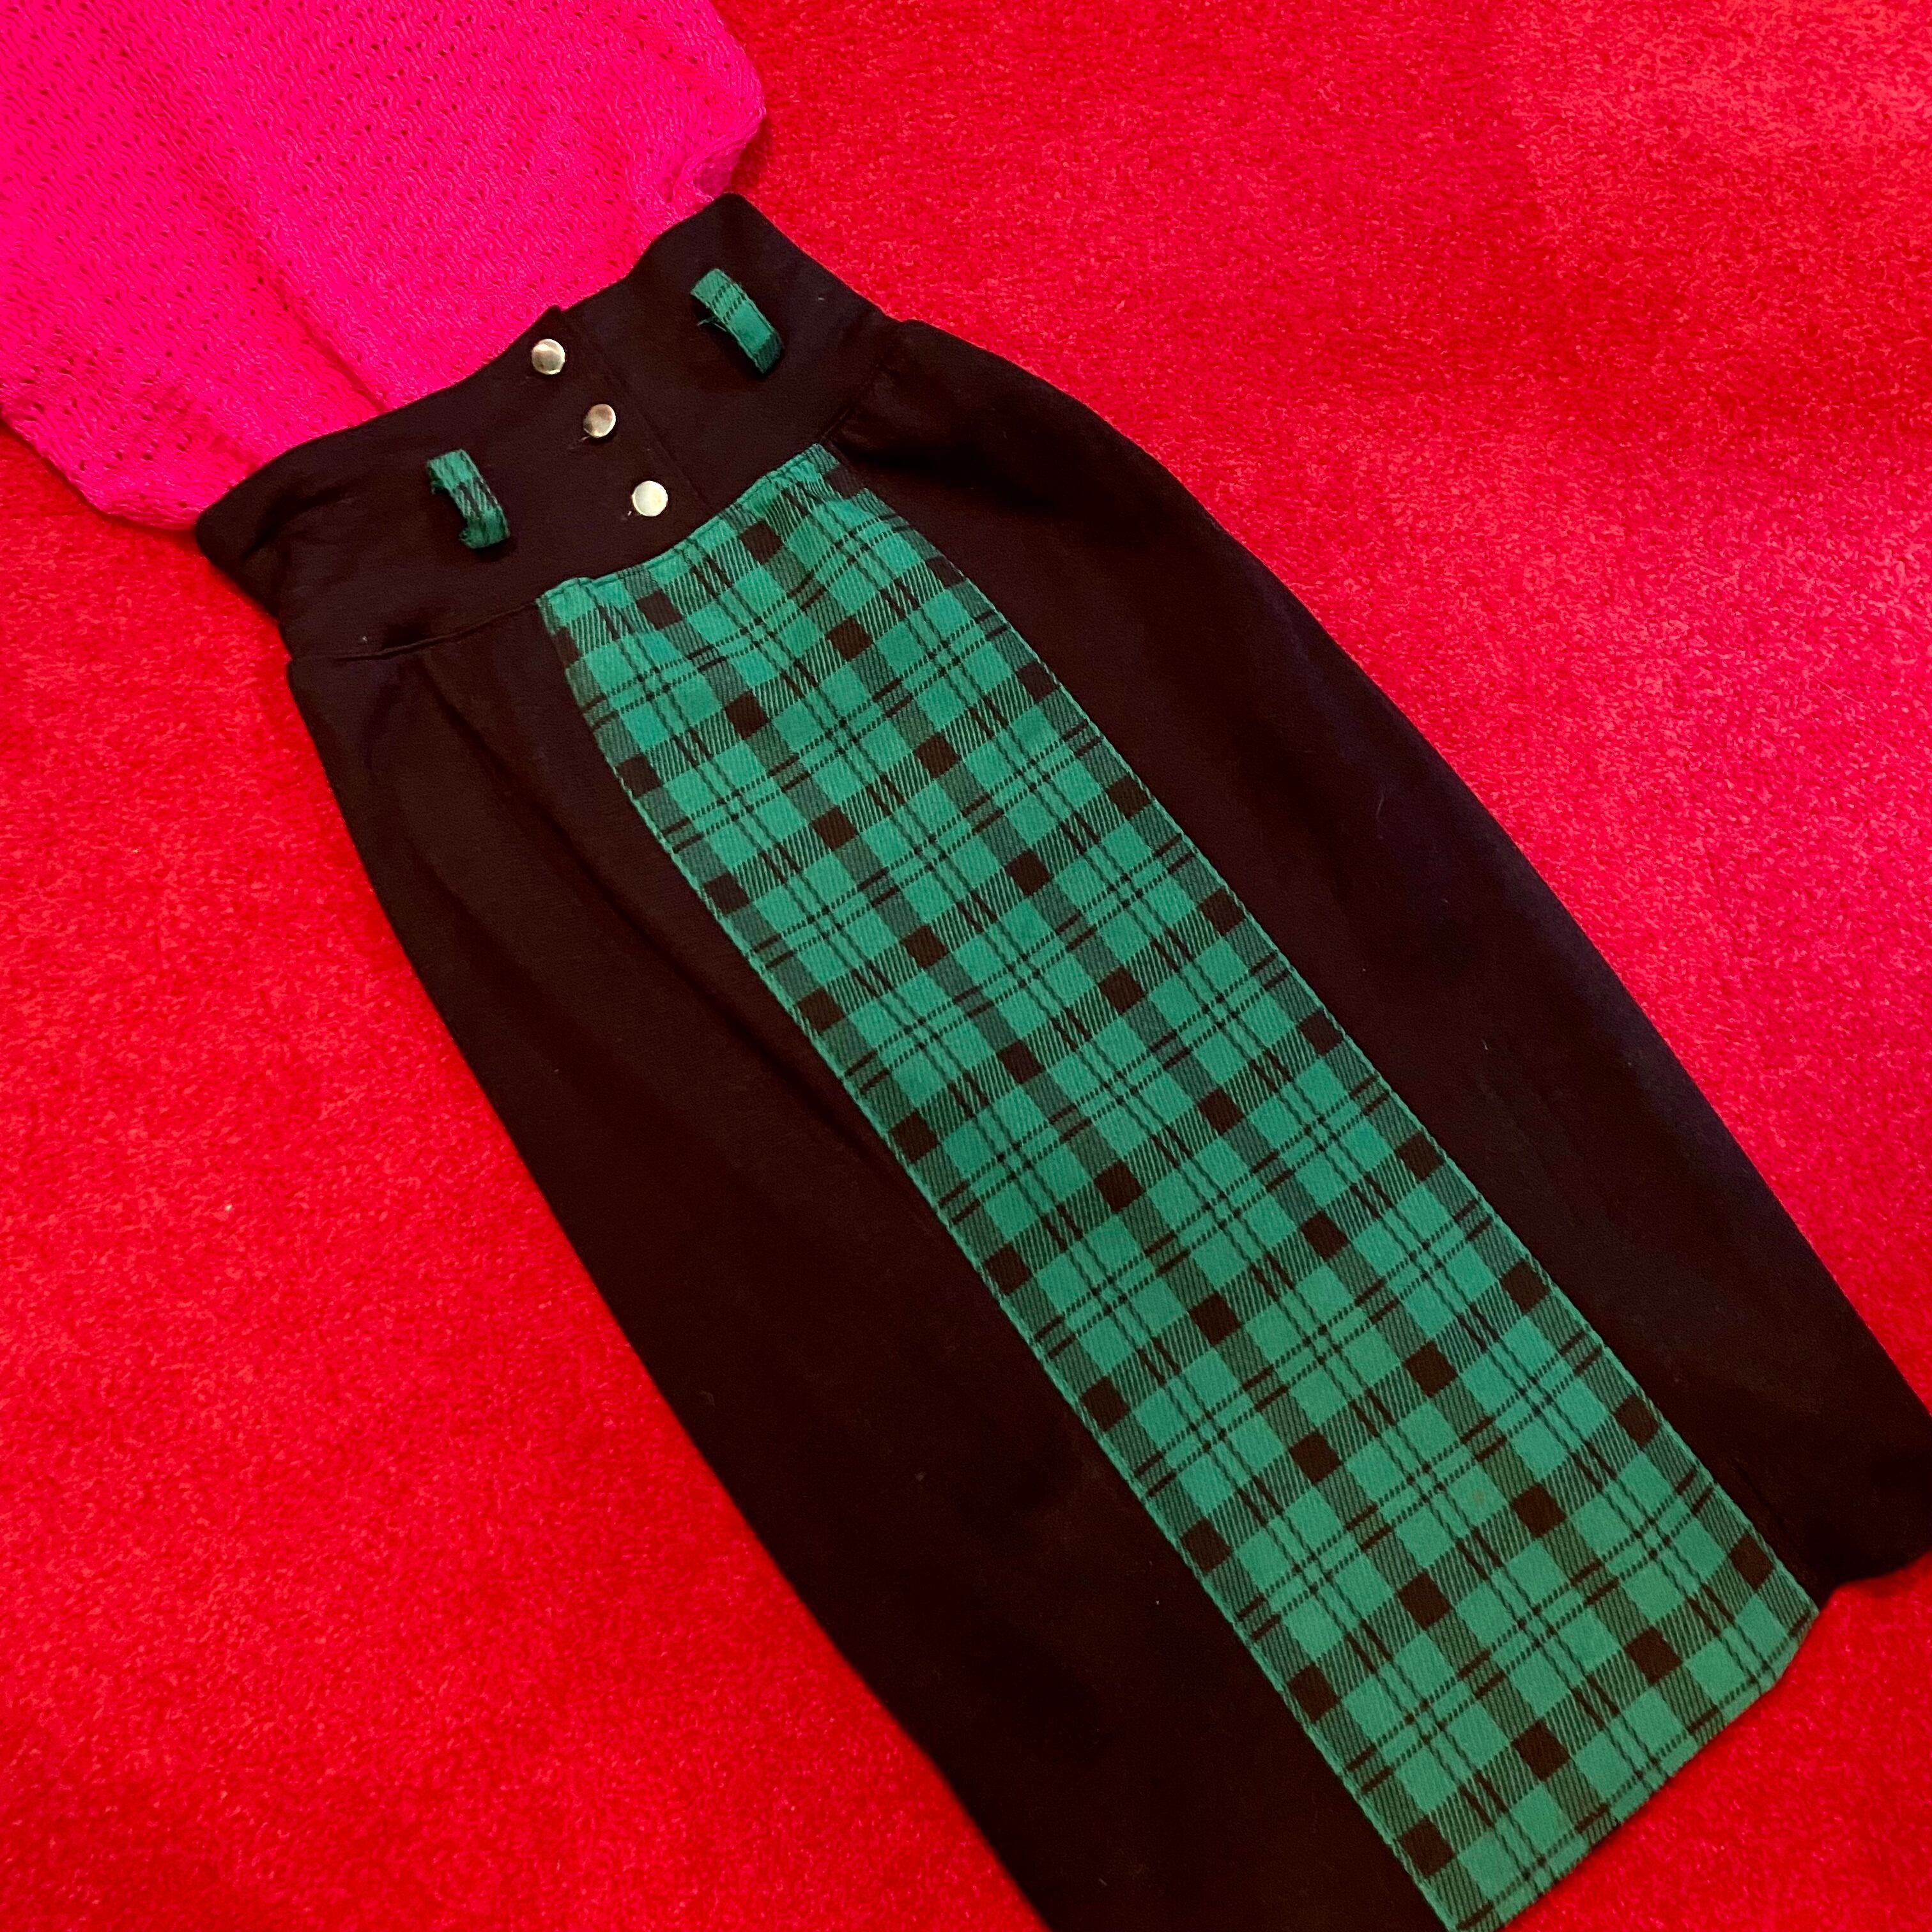 vintage 80s セットアップ タイトスカート チェック柄 緑×黒